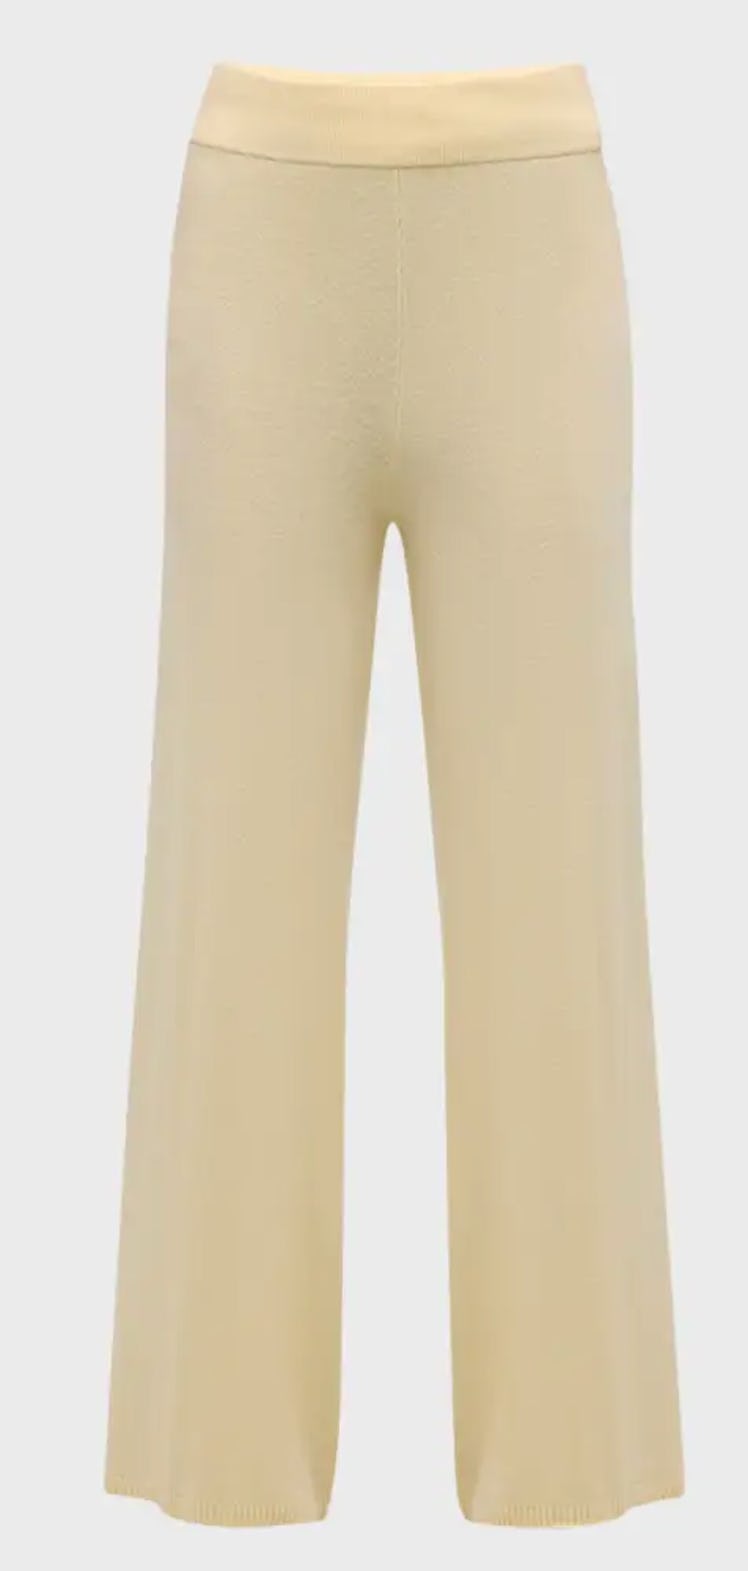 pale yellow cashmere pants